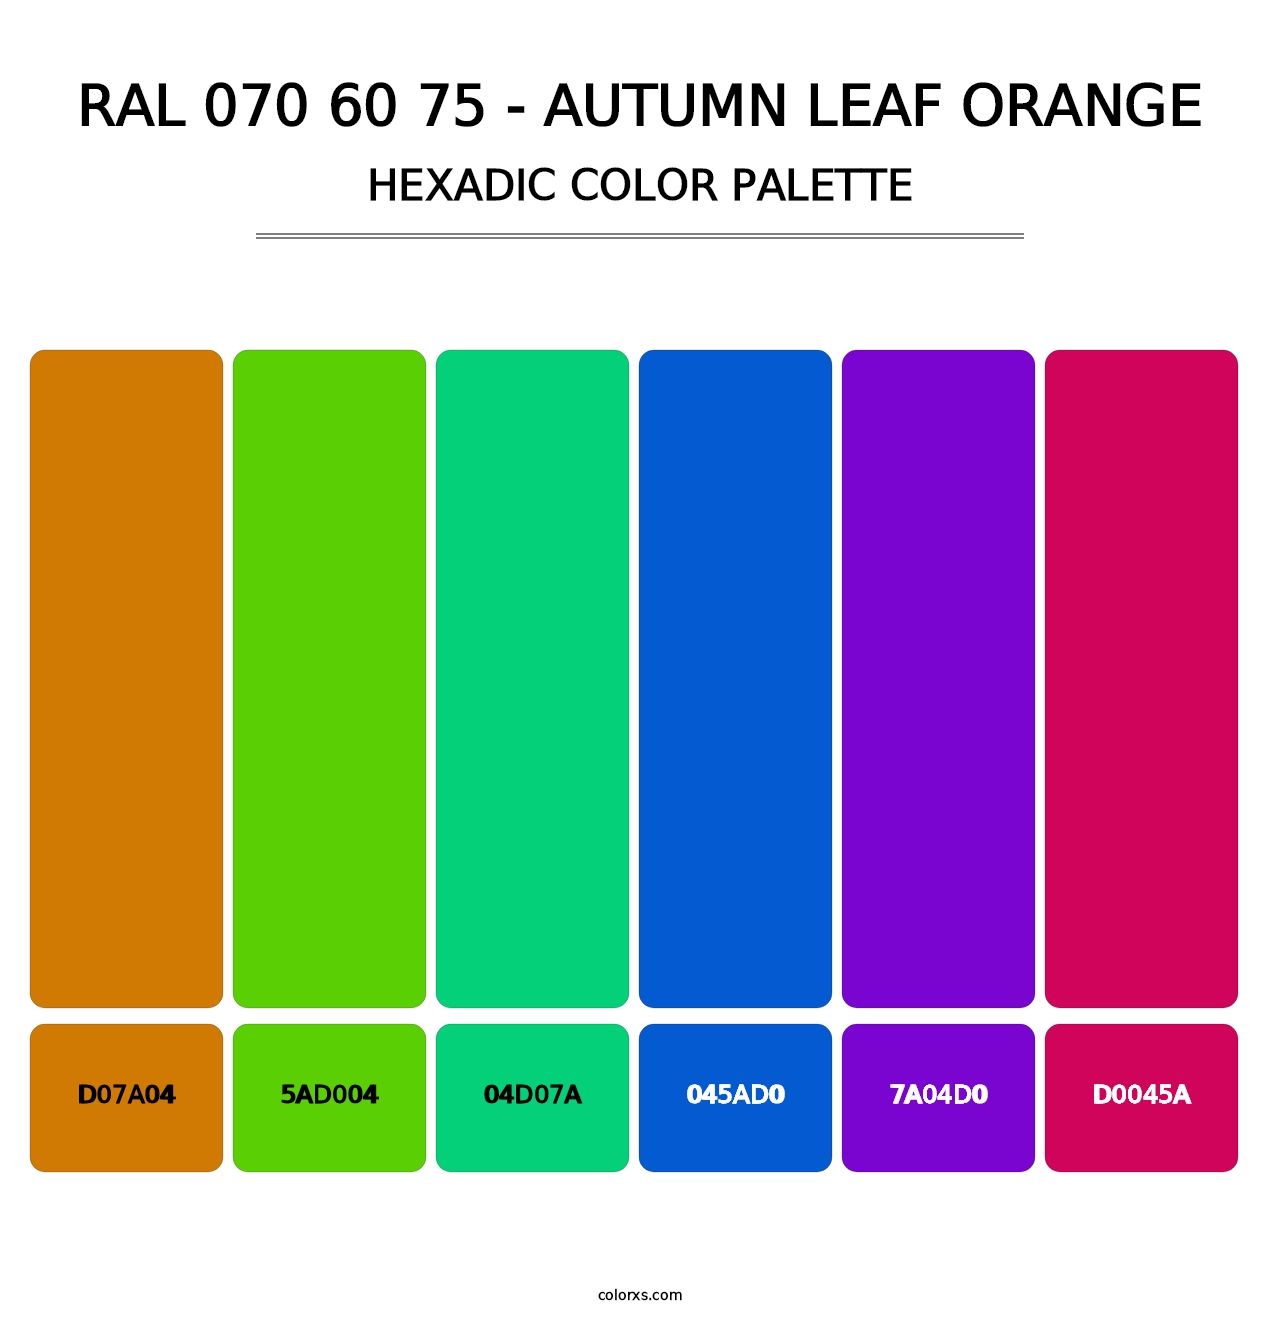 RAL 070 60 75 - Autumn Leaf Orange - Hexadic Color Palette